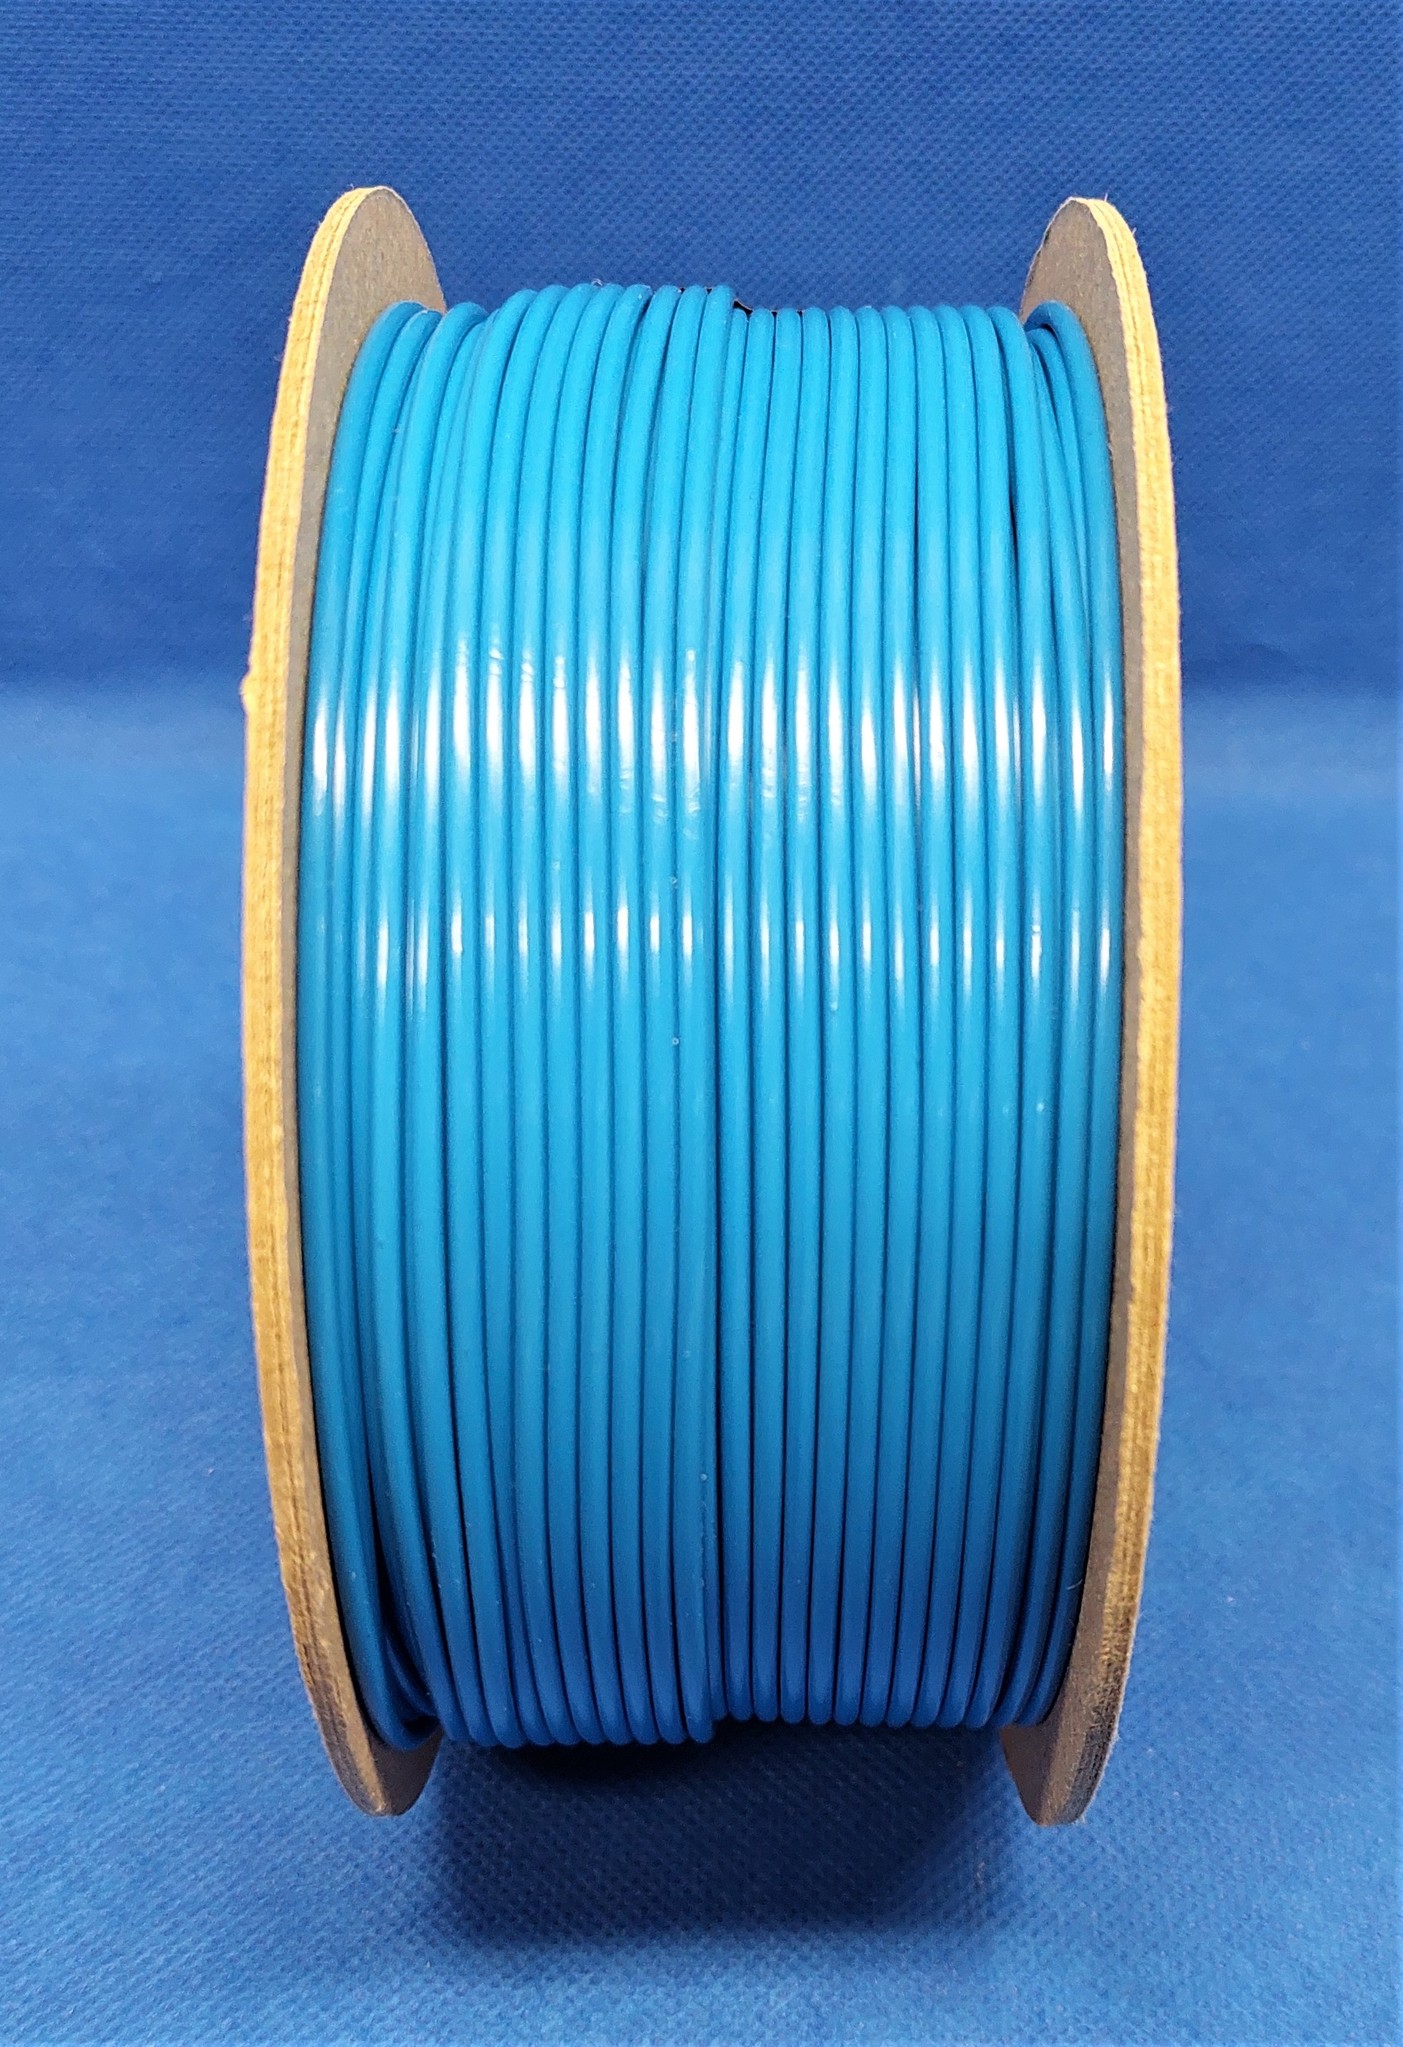 FLRY-B kabel 1,5mm - voertuigkabel - 100 meter op rol - Kleur Blauw 